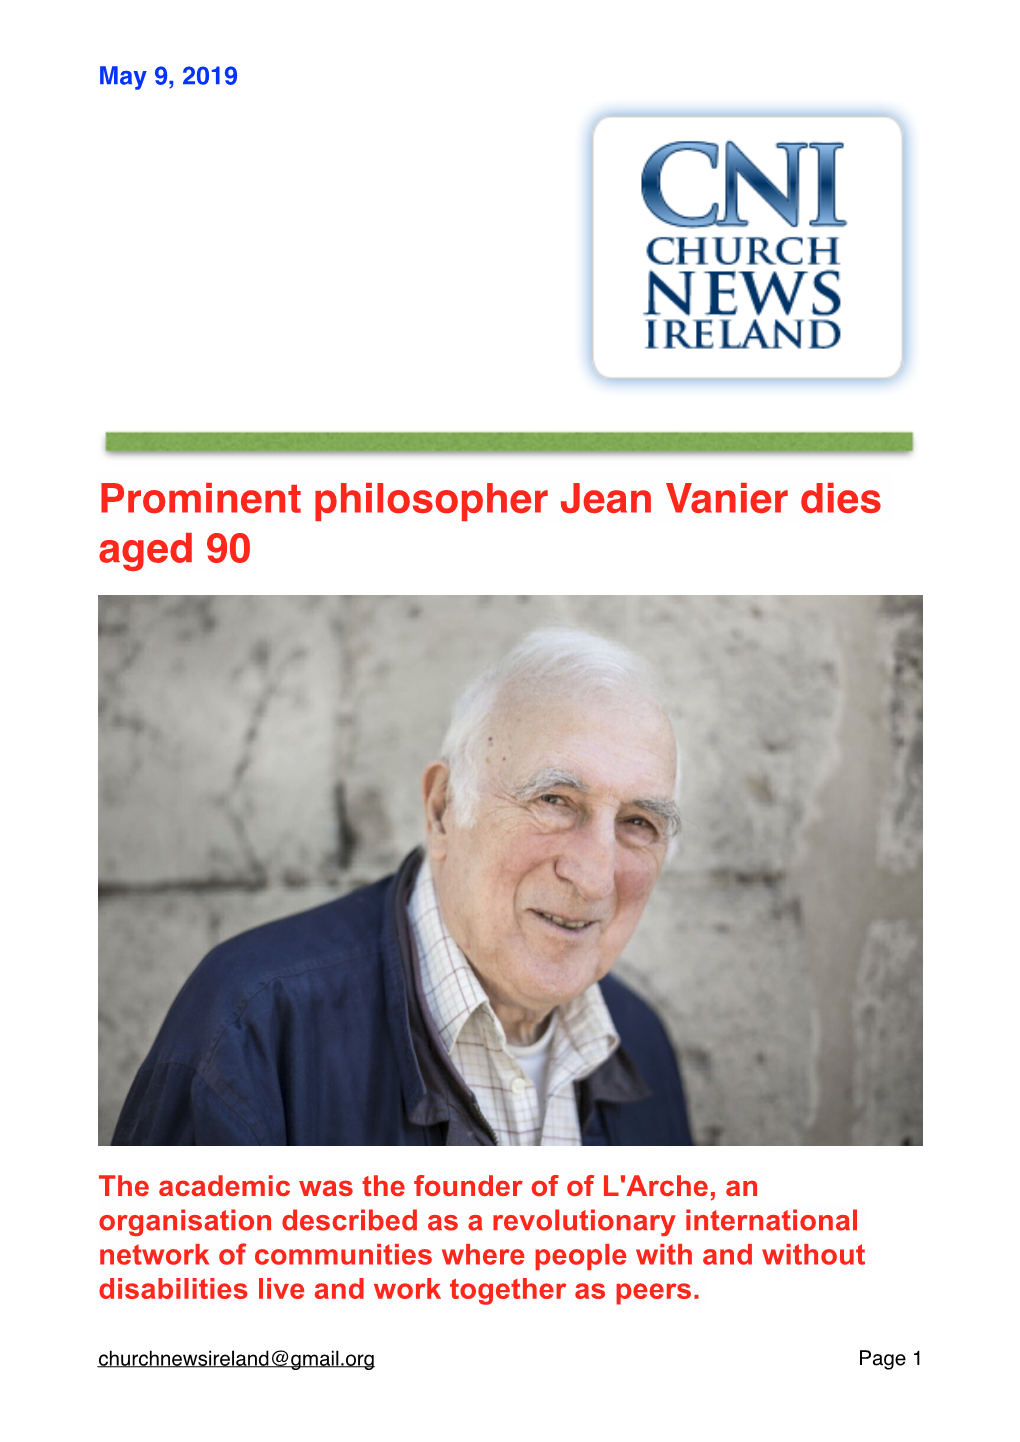 Prominent Philosopher Jean Vanier Dies Aged 90